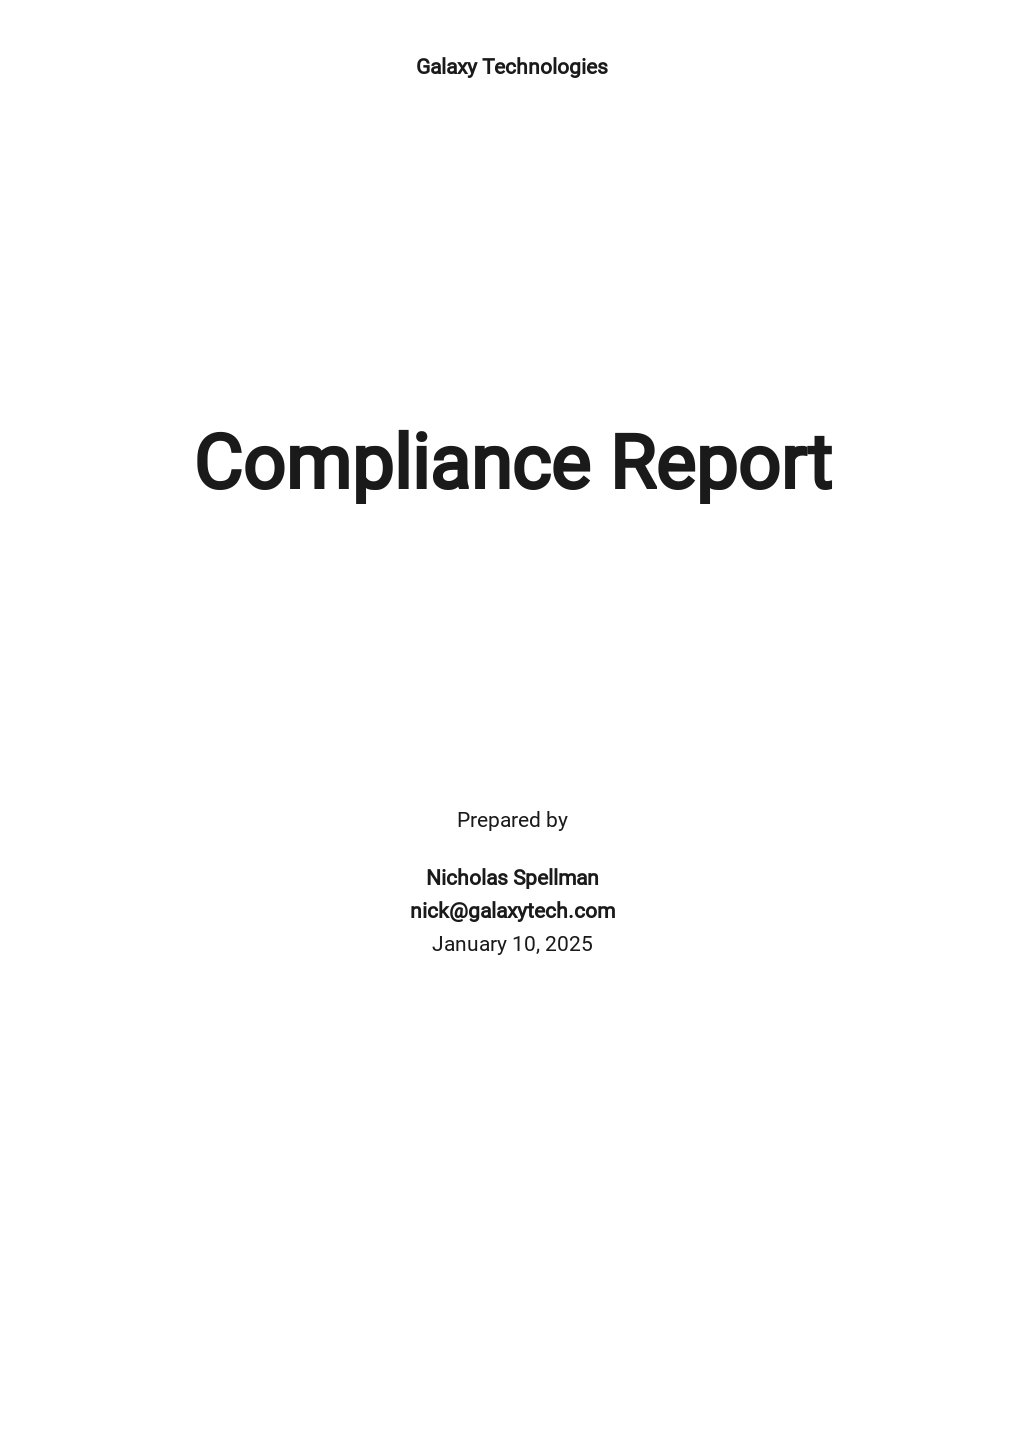 Compliance Report Template .jpe